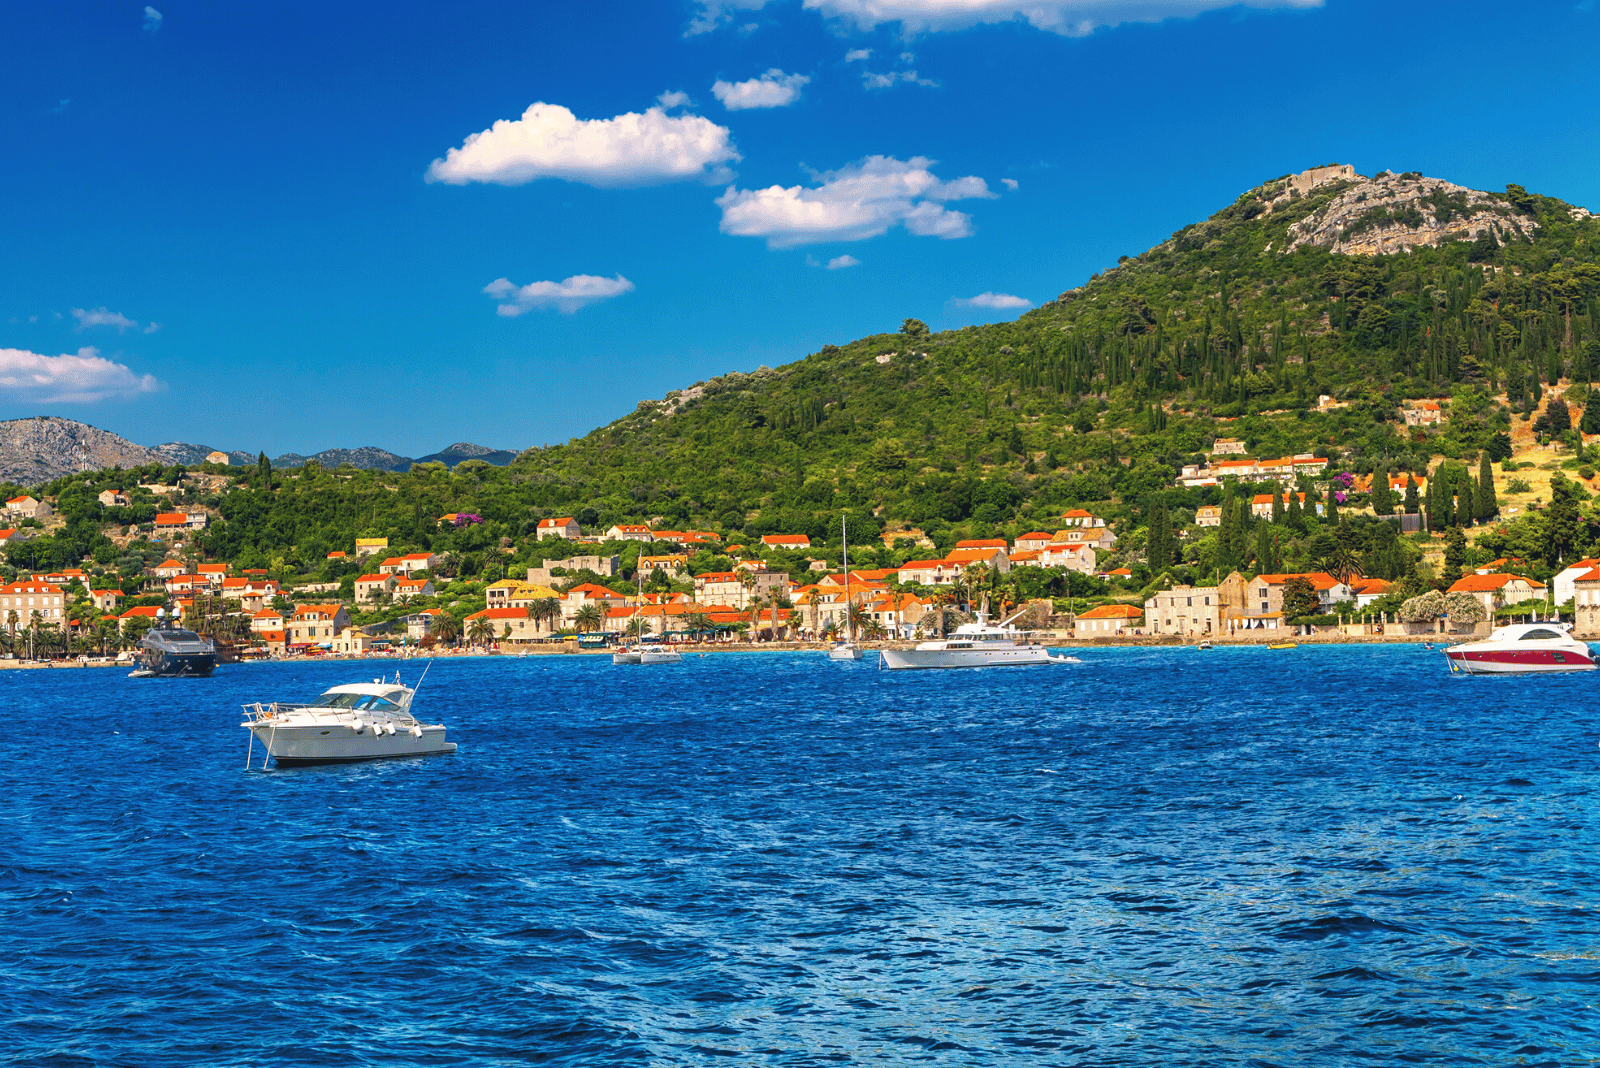 Lopud Island, one of Croatia's Elaphiti Islands